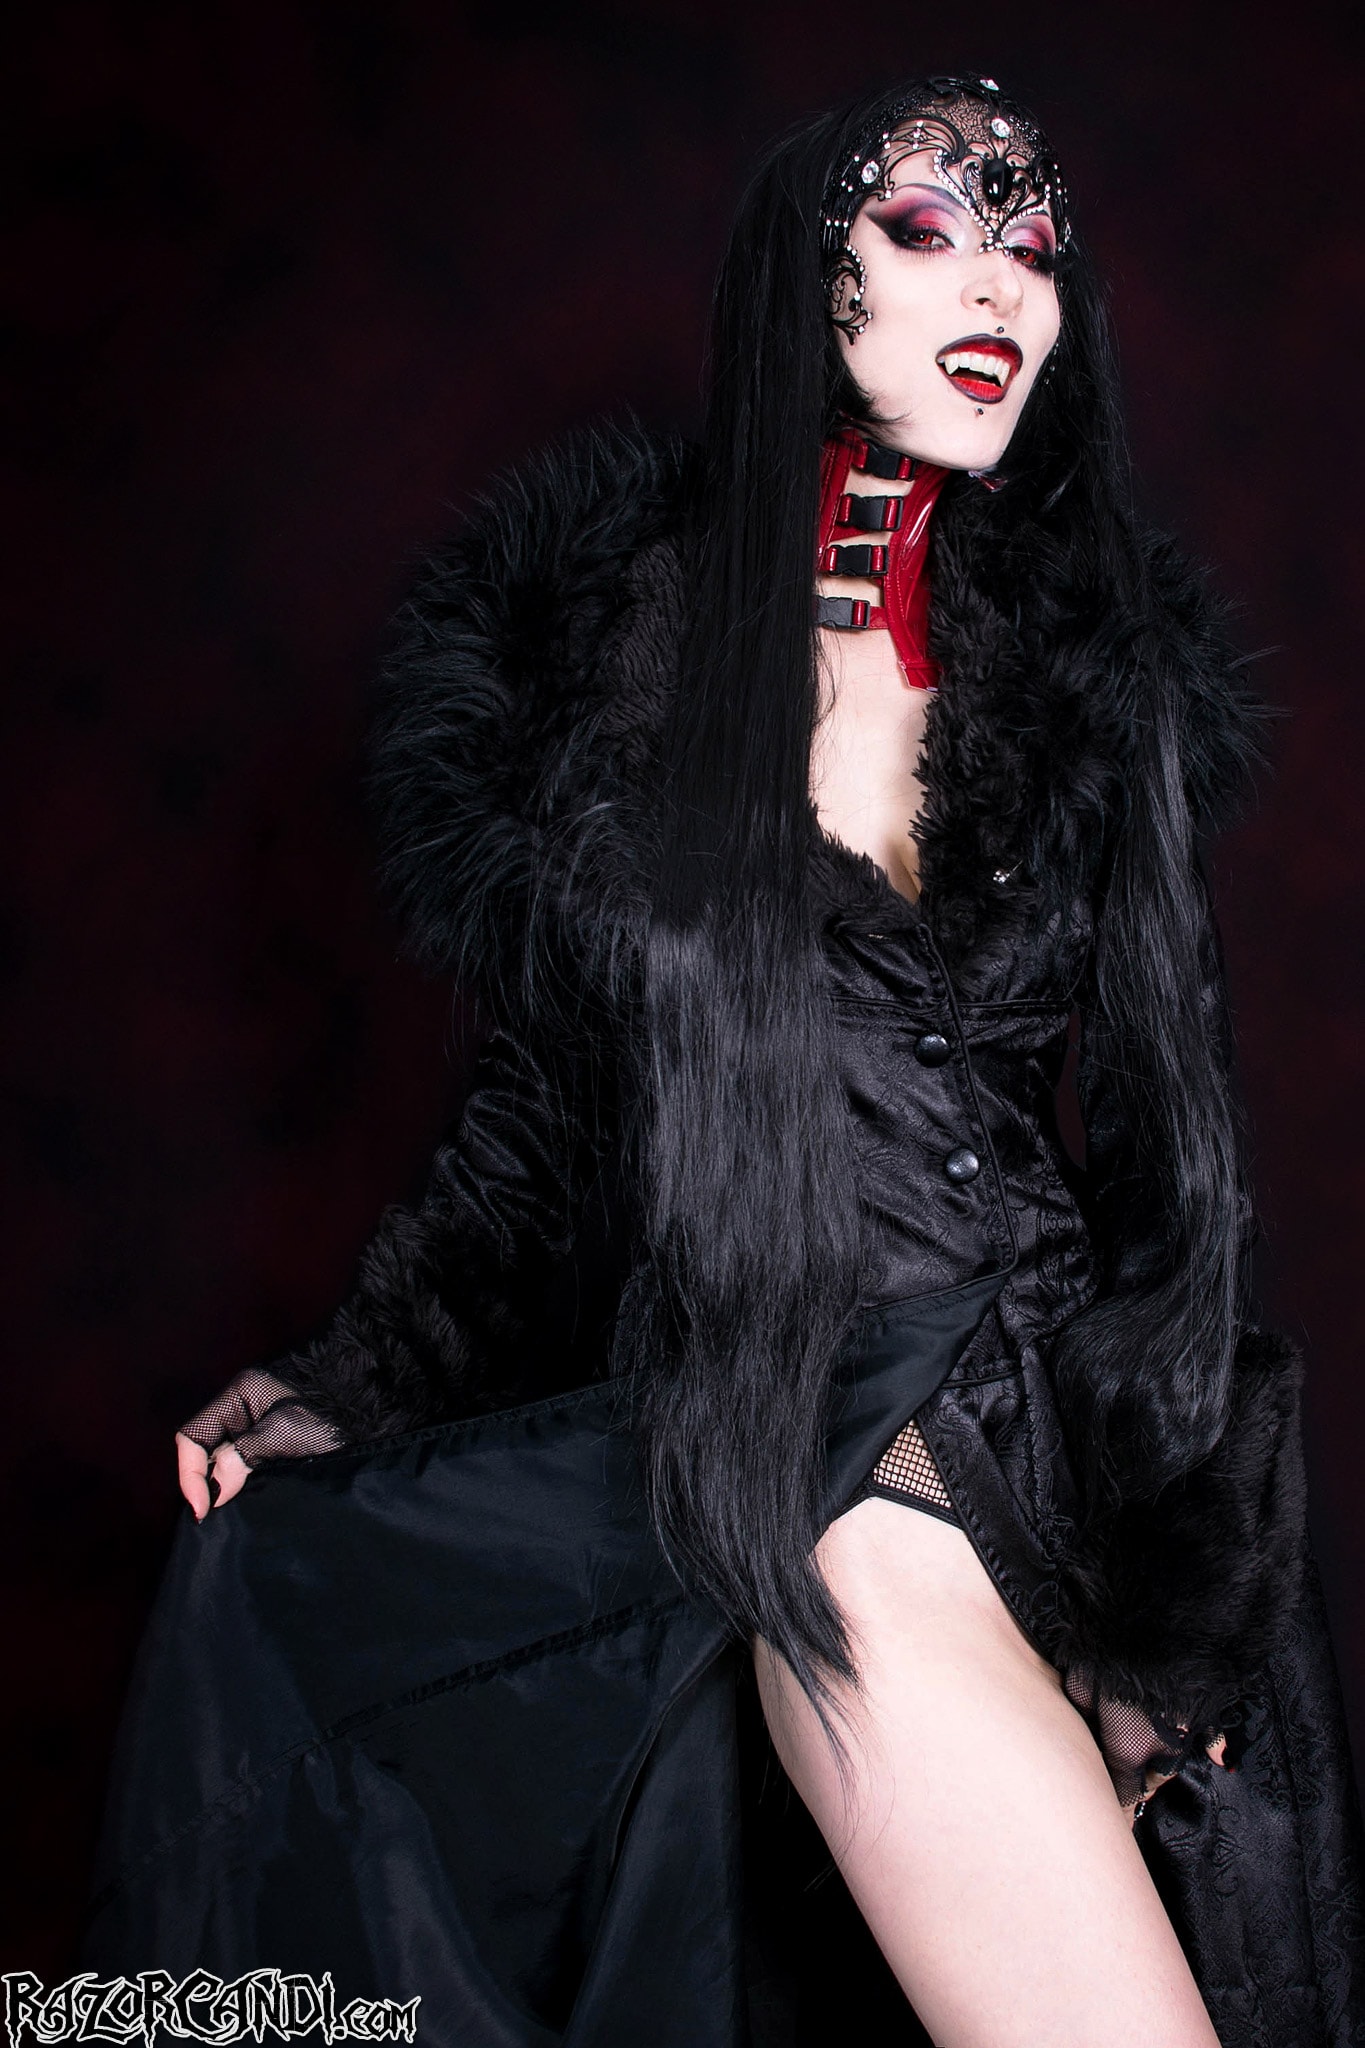 Razor Candi 'Elegantly Tempting Gothic Vampire Beauty RazorCandi' starring Razor Candi (Photo 1)